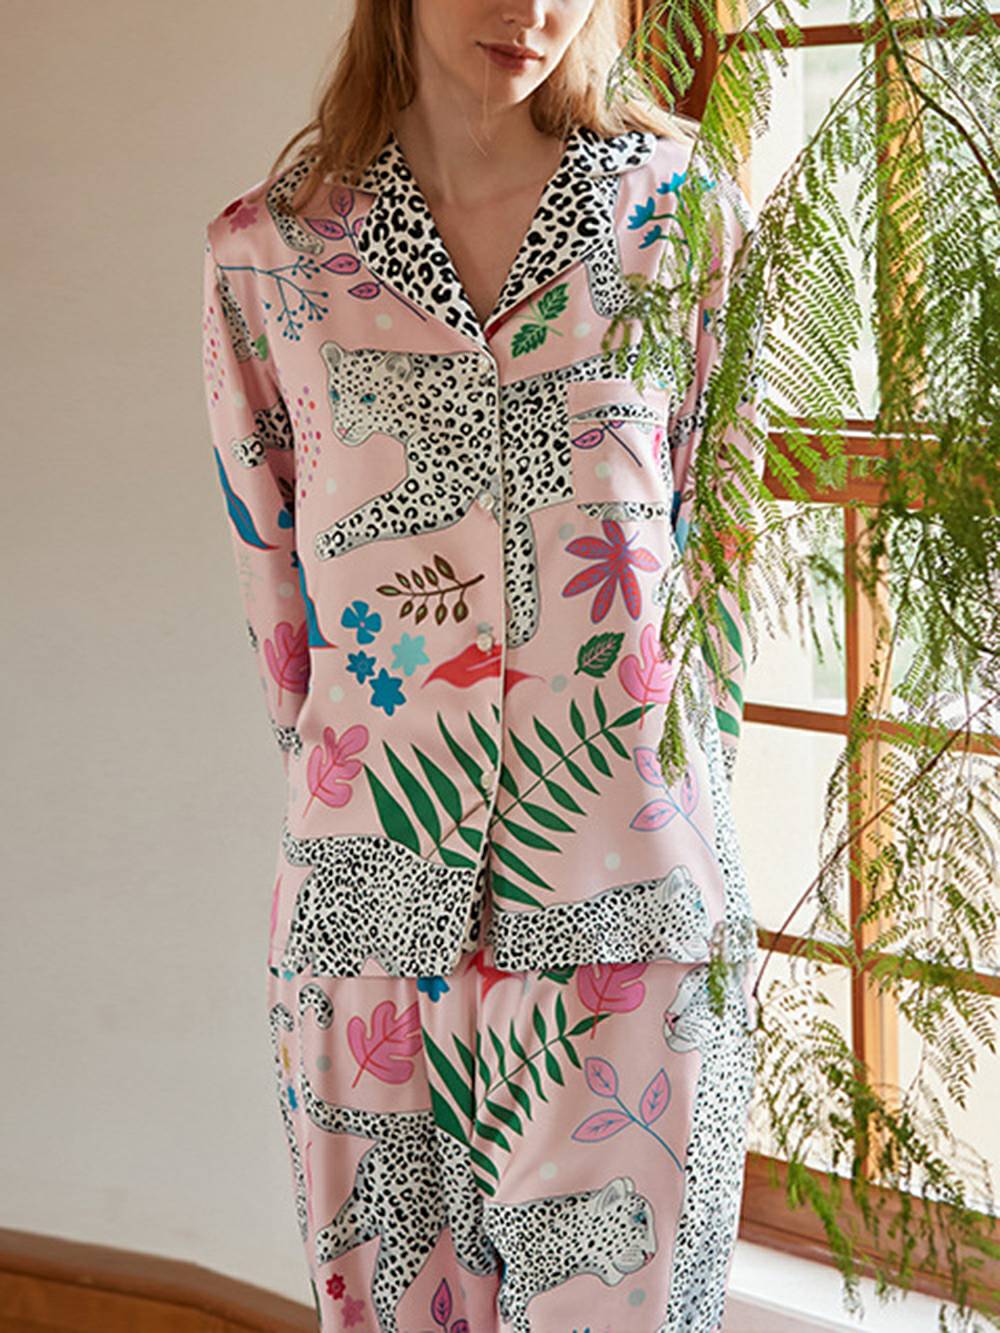 Dressing Rosa Schneeleoparden-Pyjama-Set aus Seide